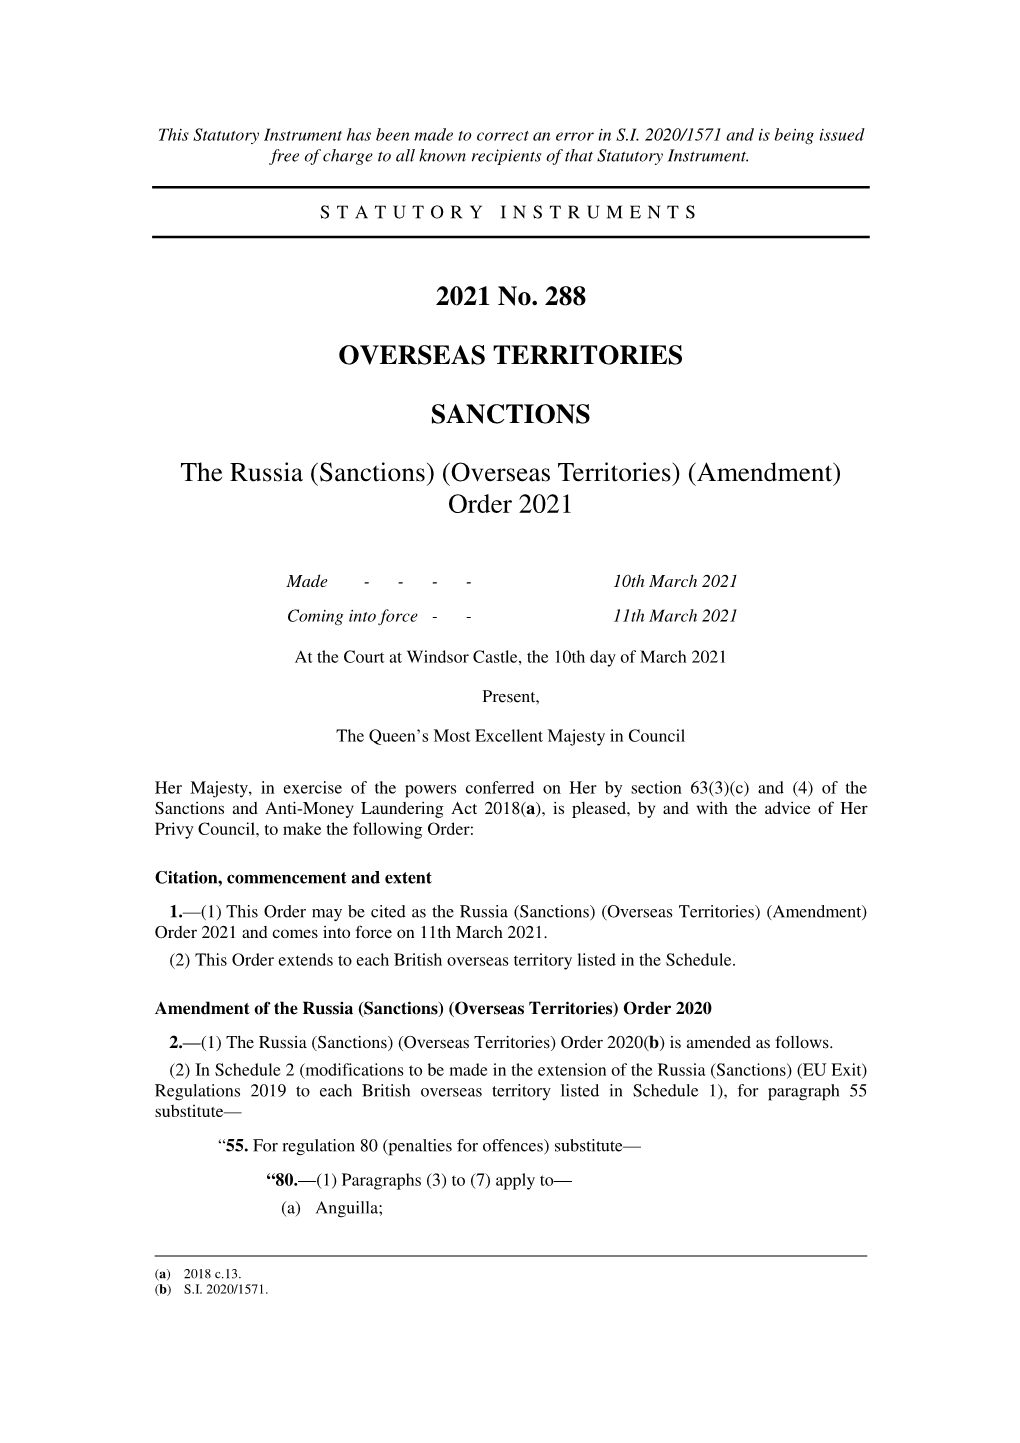 The Russia (Sanctions) (Overseas Territories) (Amendment) Order 2021